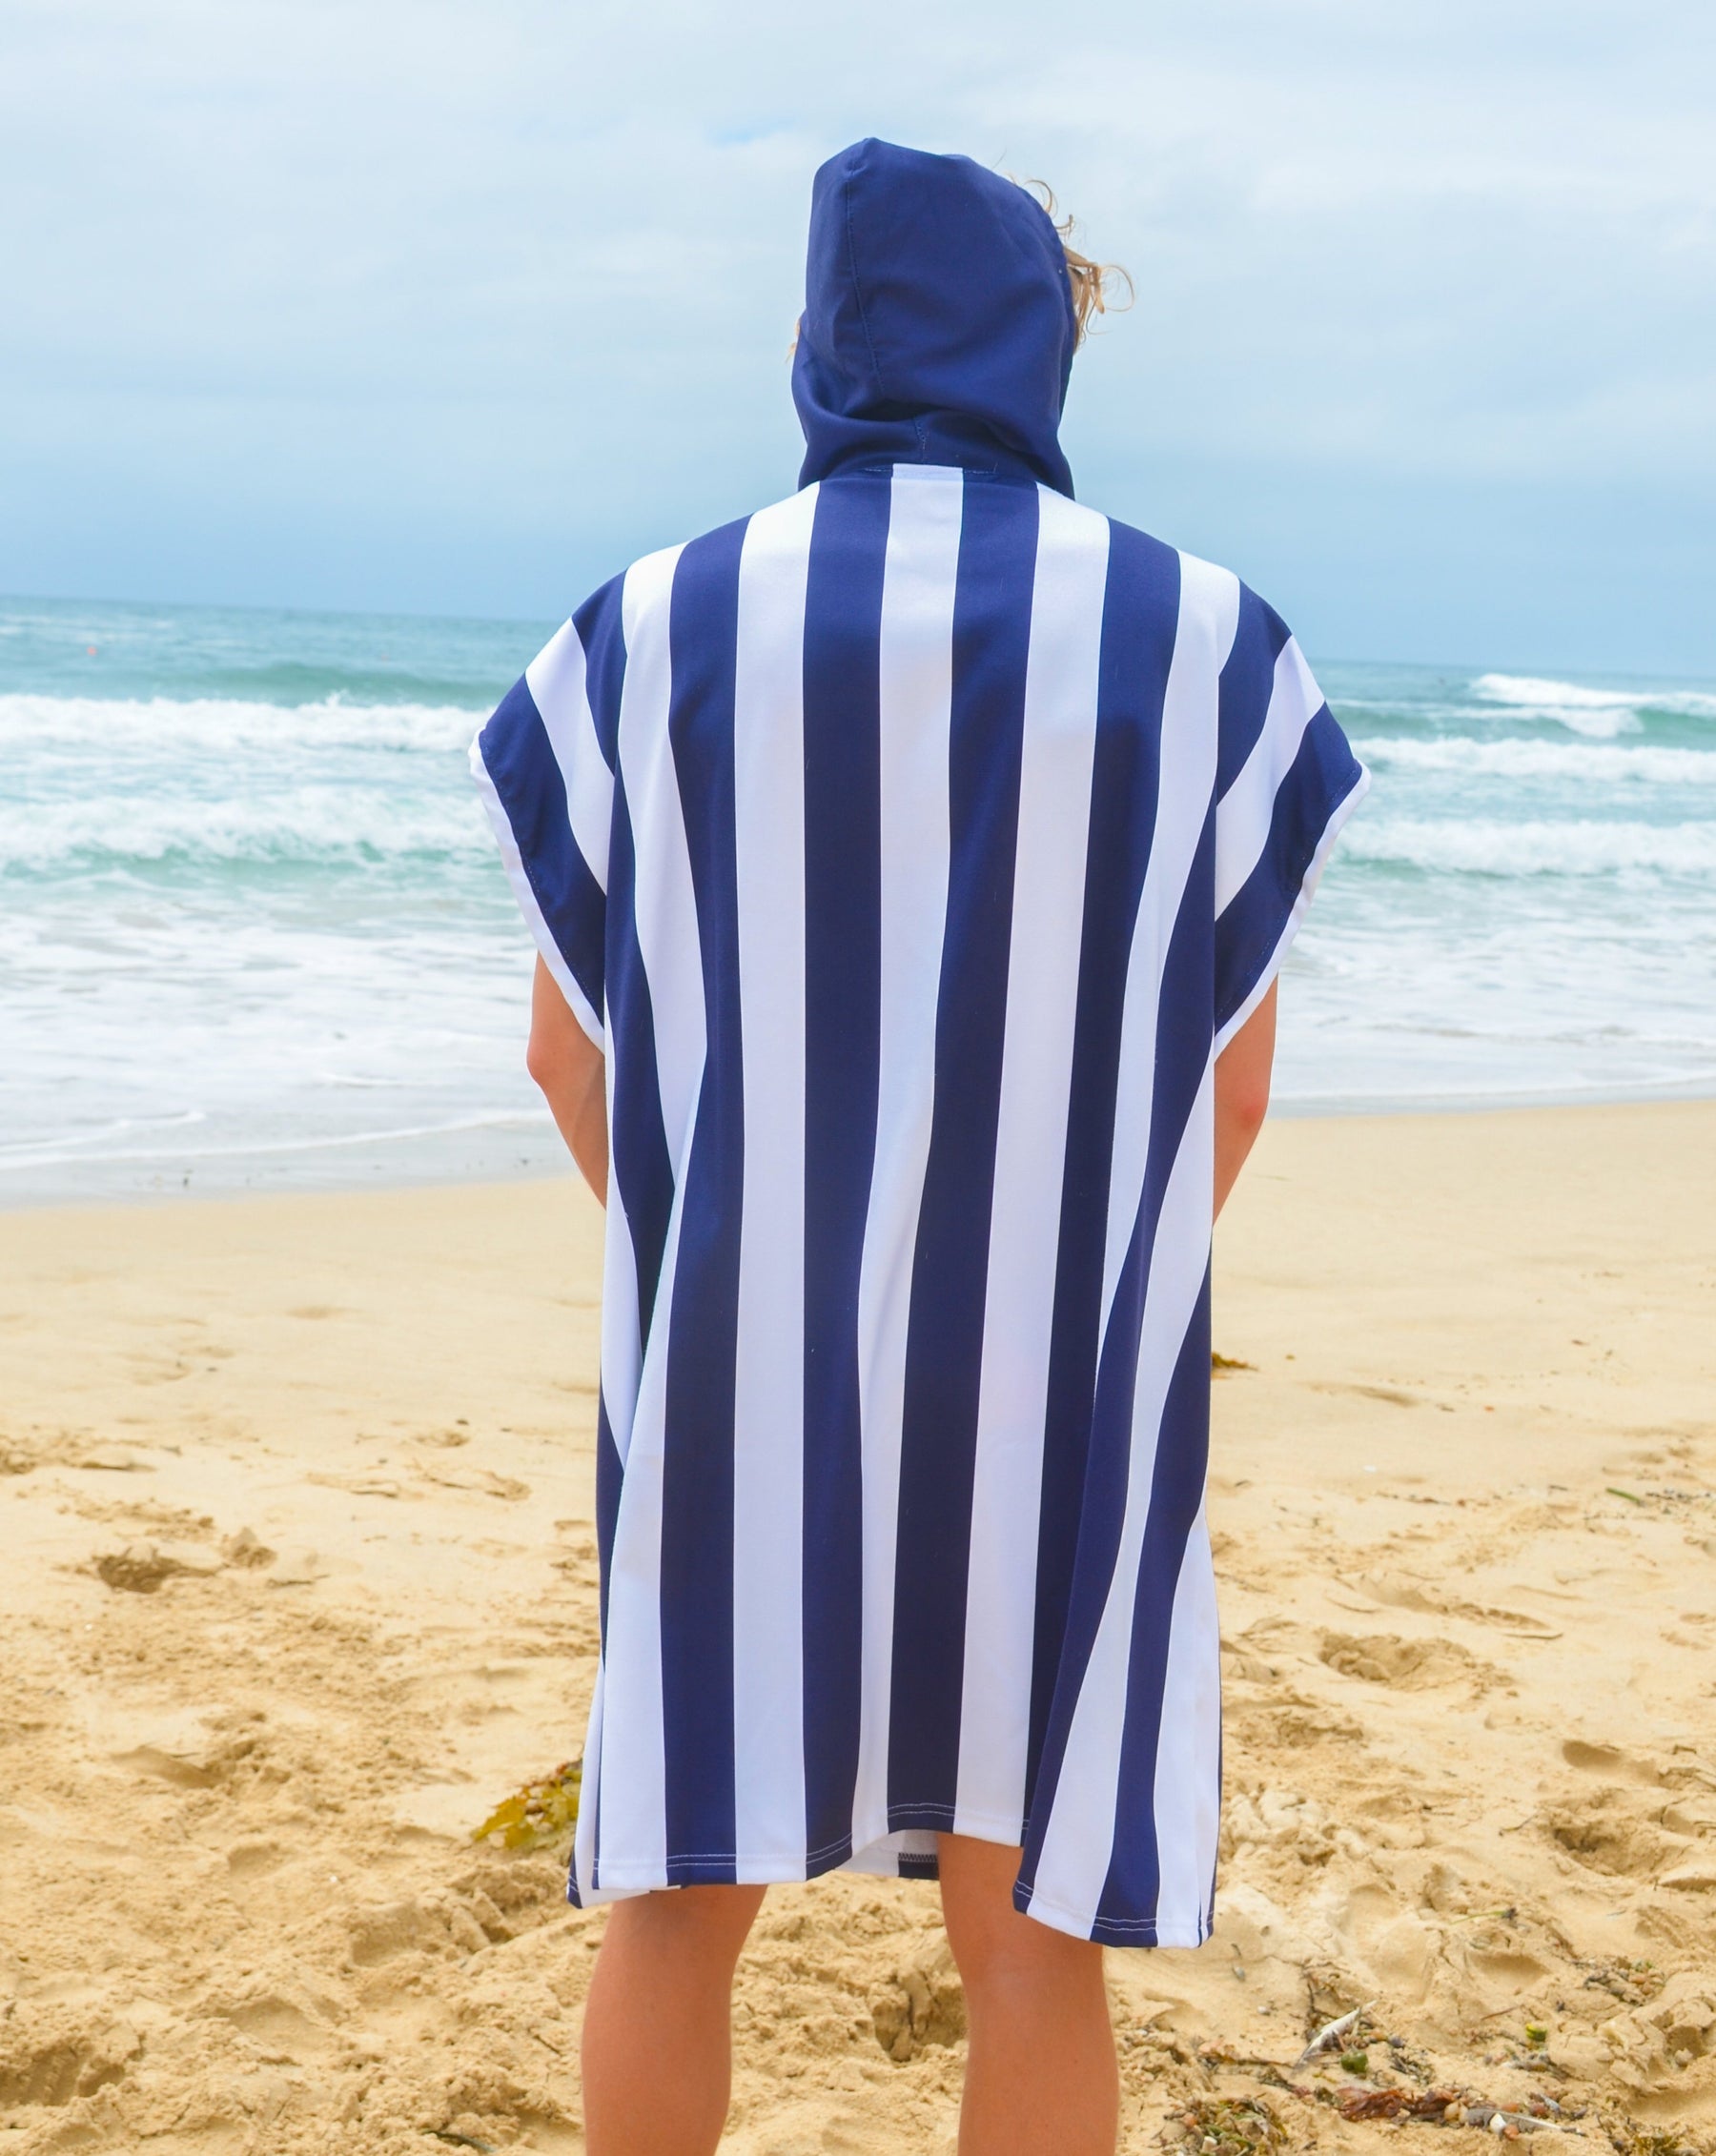 Blue & White Stripes Hooded Towel